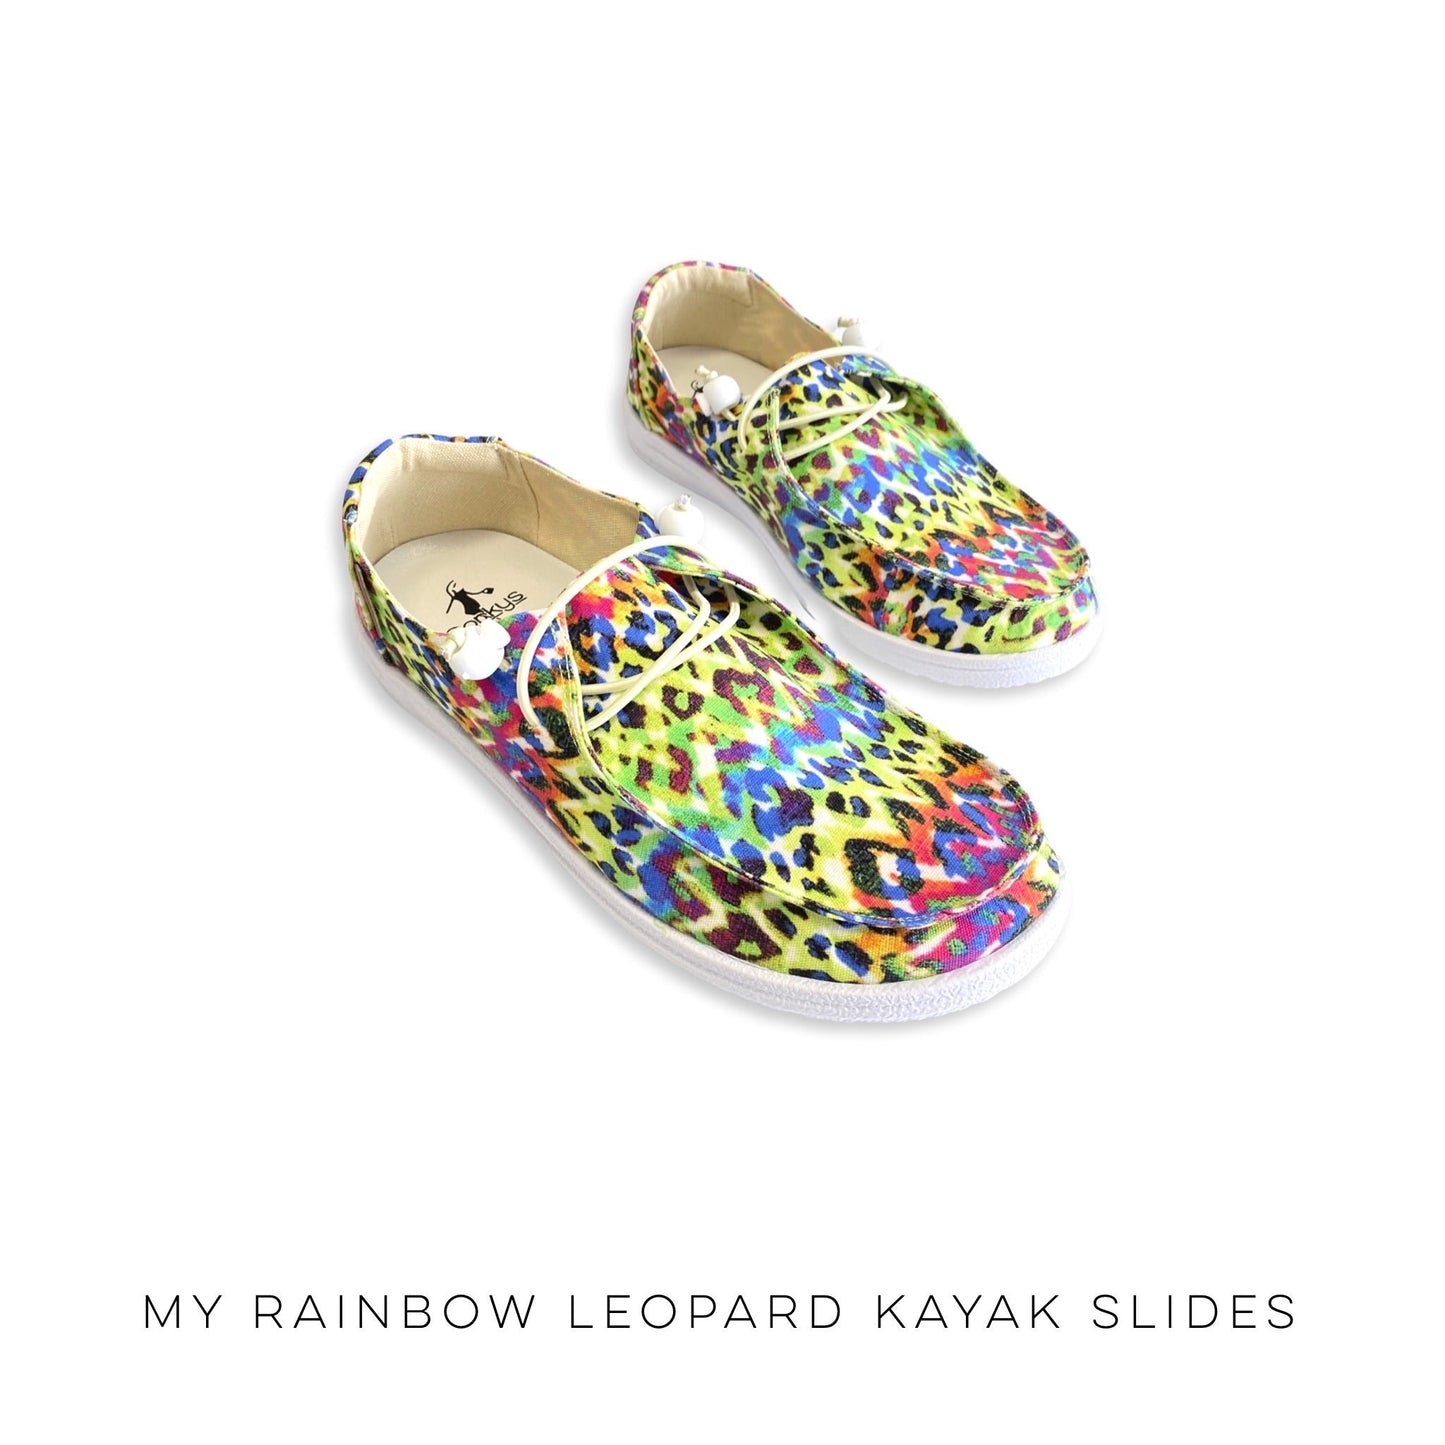 My Rainbow Leopard Kayak Slides